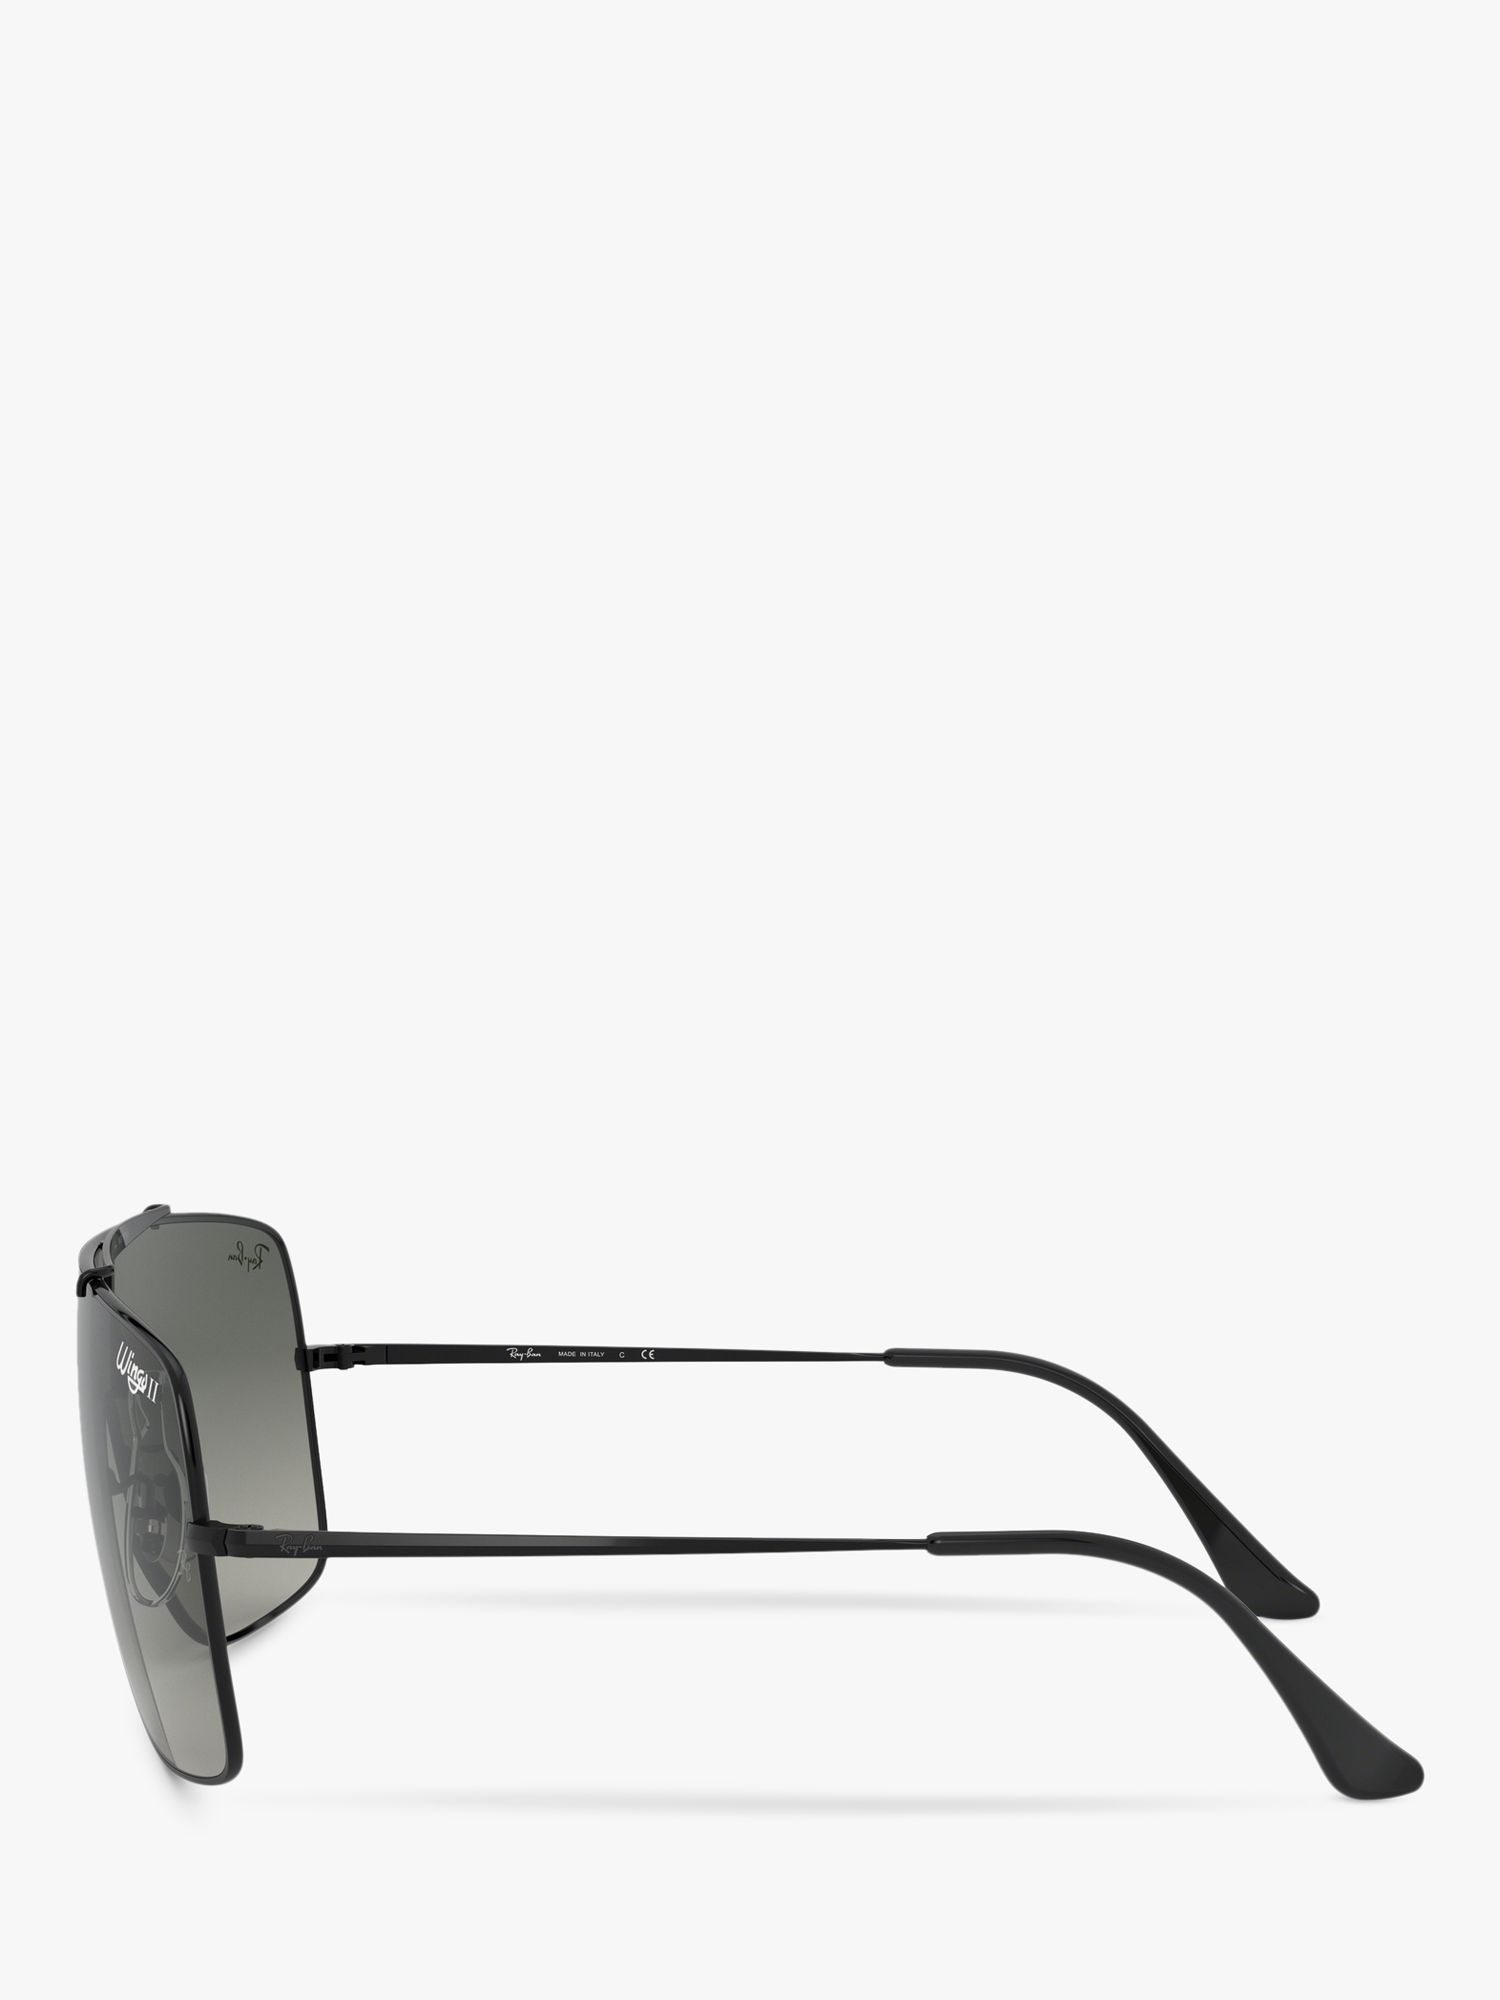 Ray-Ban RB3697 Men's Square Sunglasses, Black/Grey Gradient